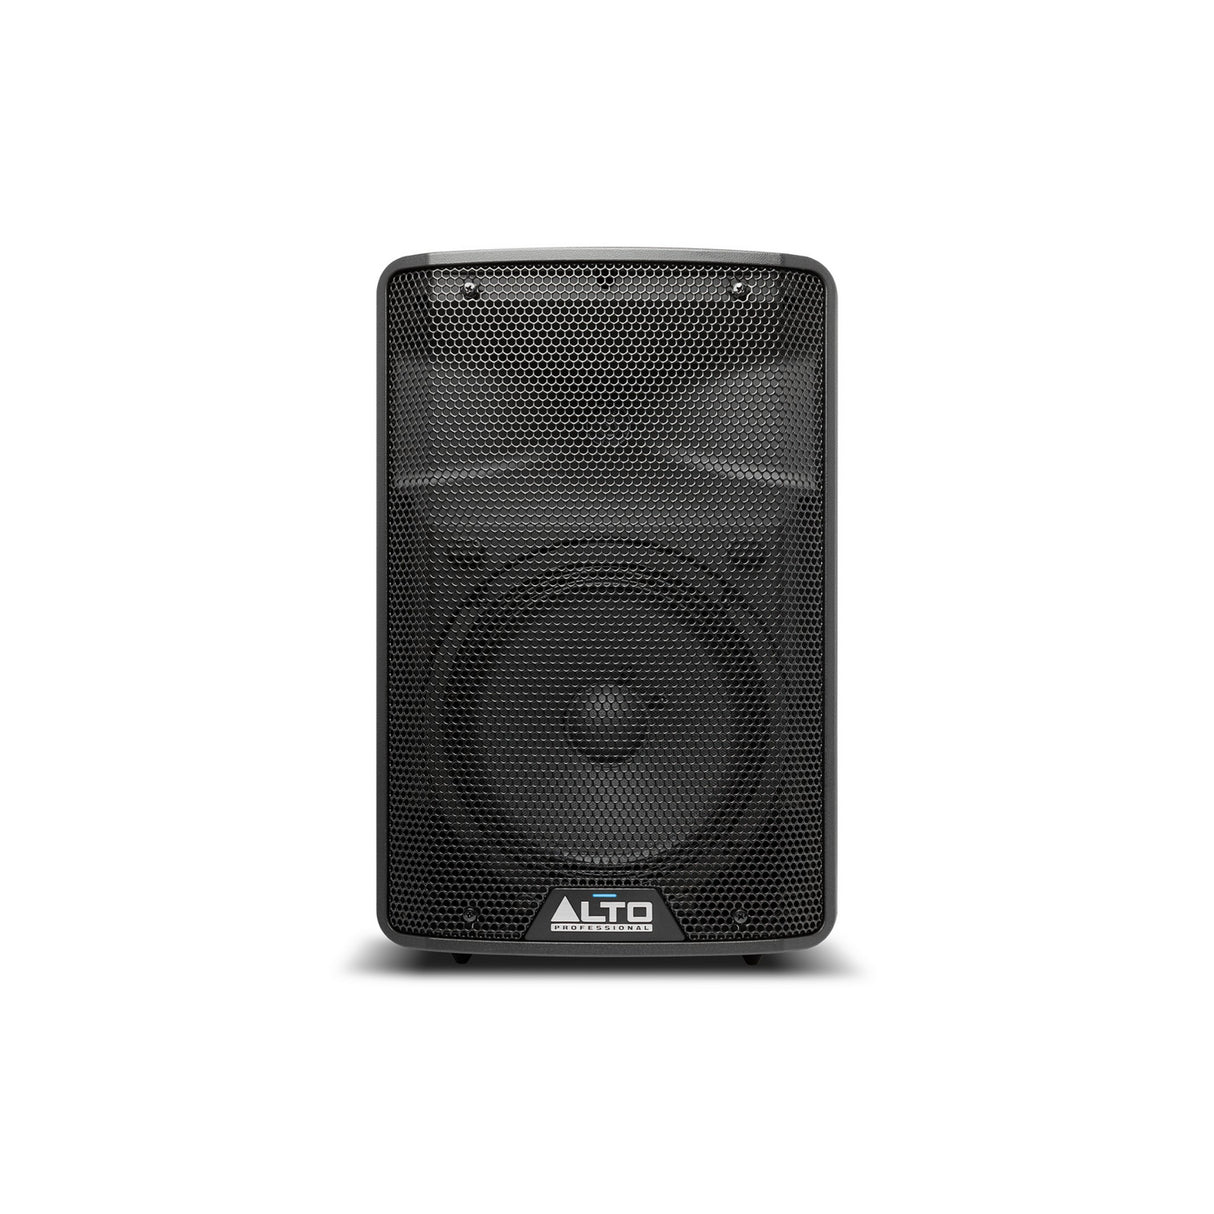 Alto Professional TX308 350-Watt 8-Inch 2-Way Powered Loudspeaker